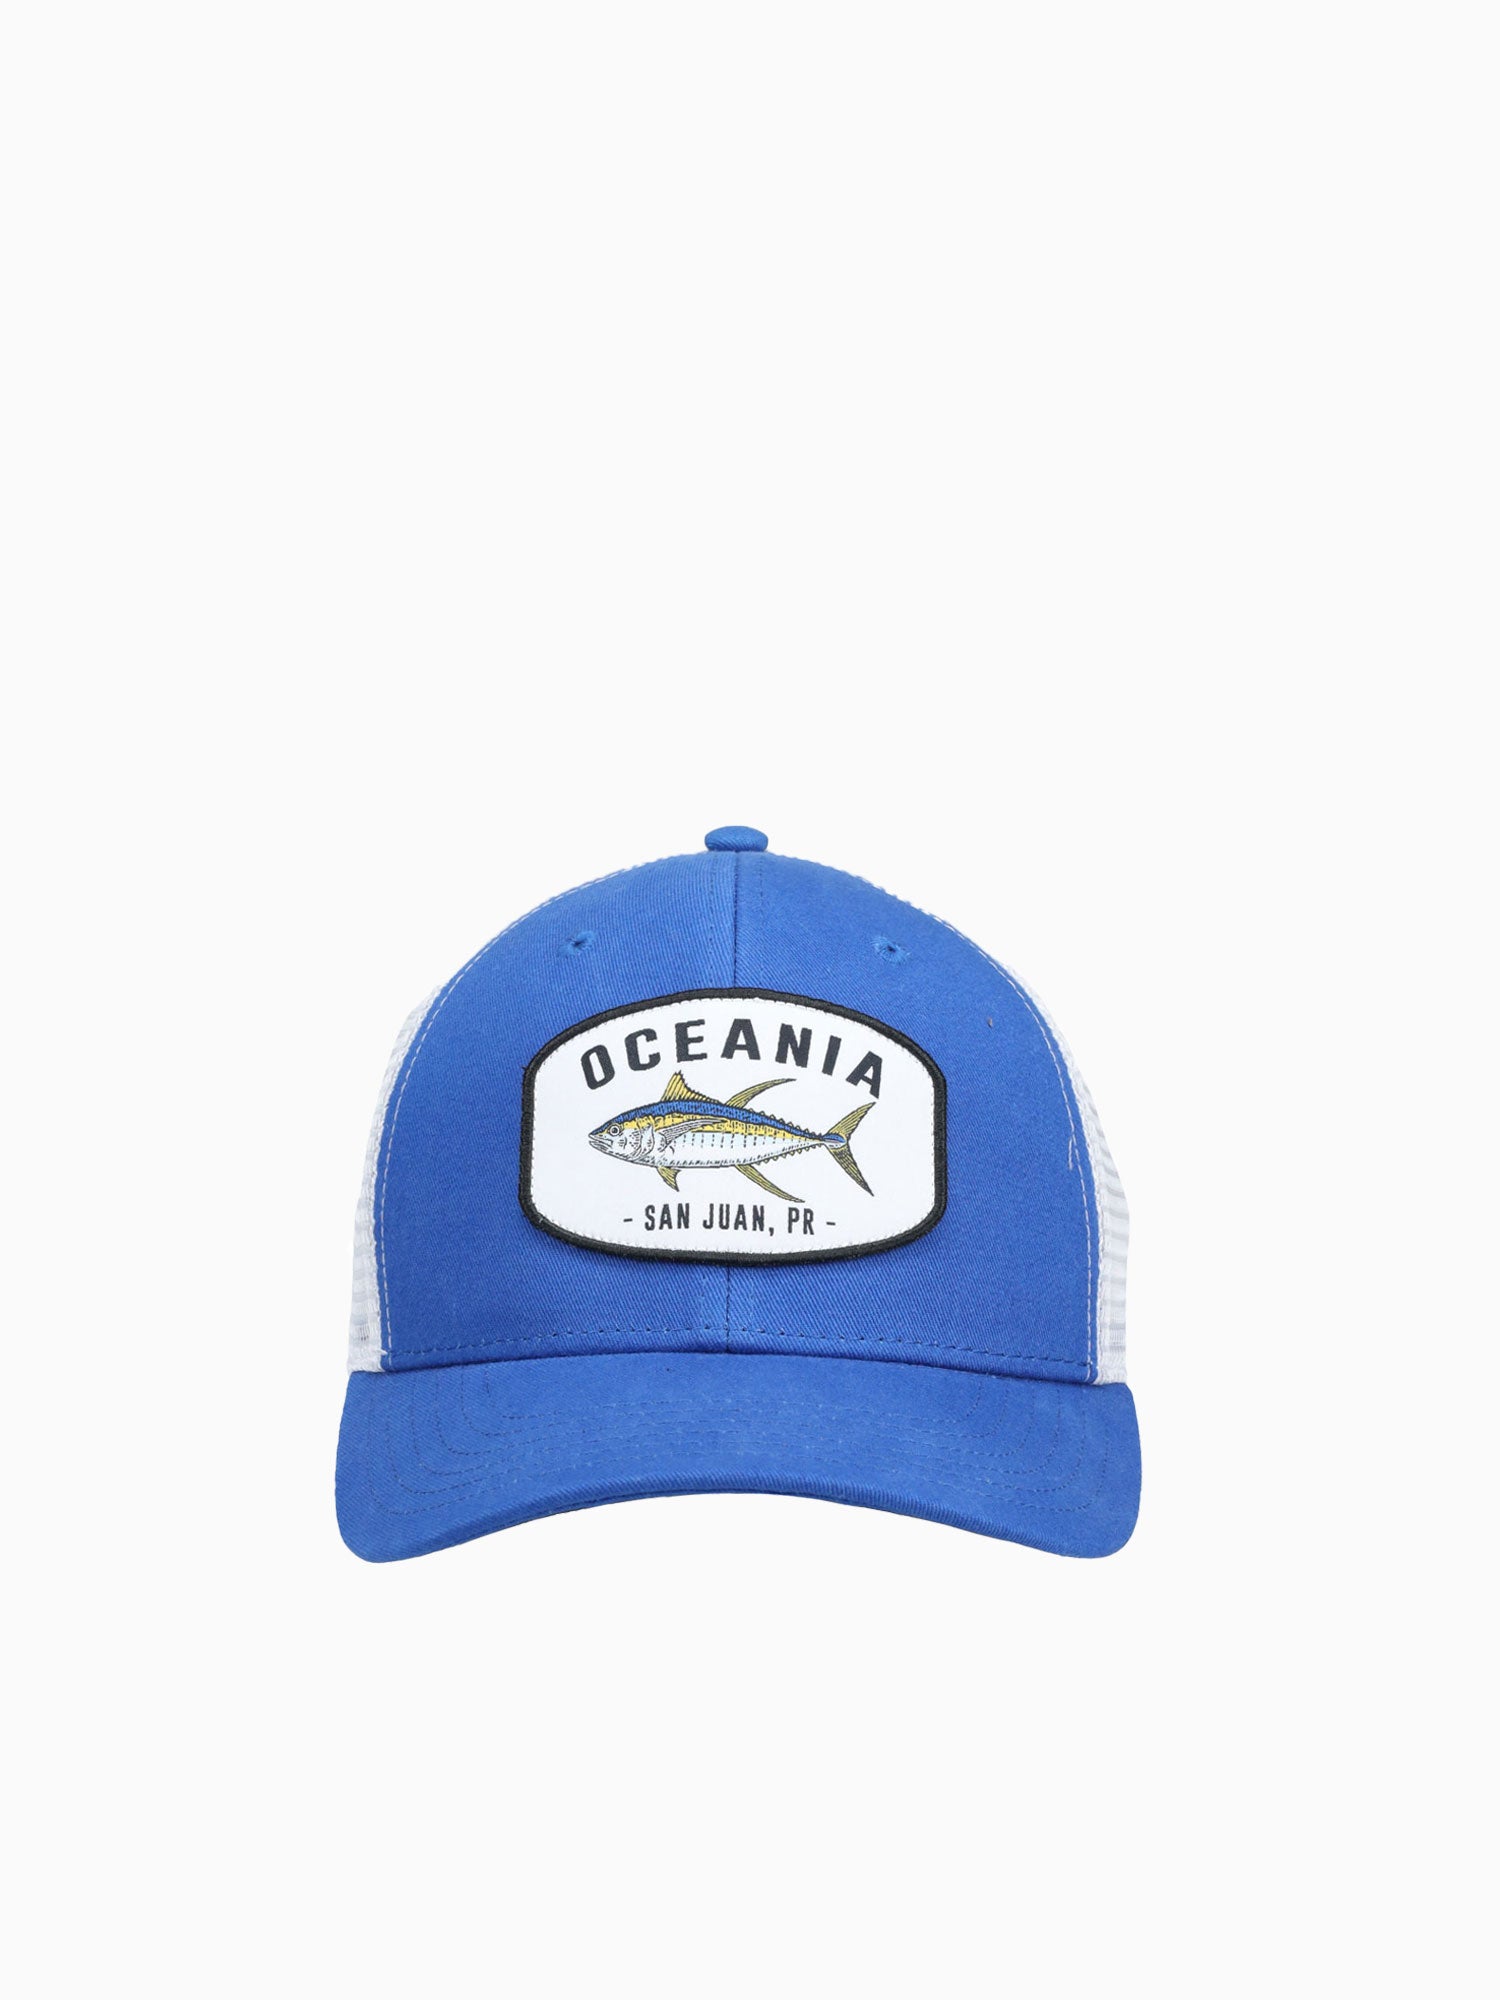 Oceania Bluefin Tuna Hat Blue Cotton Blue / ONE